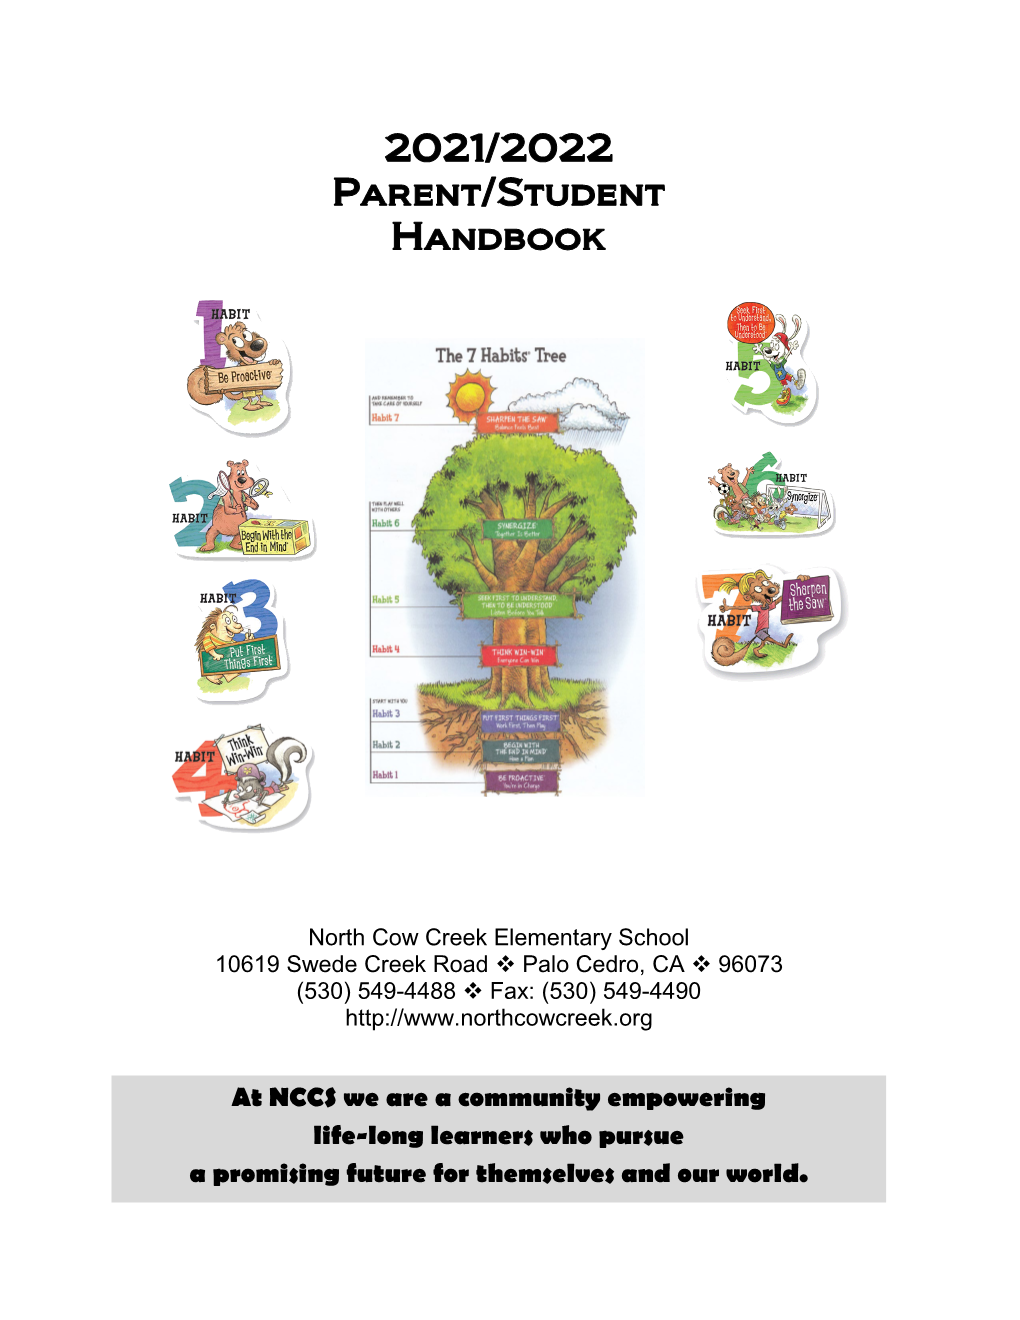 2021/2022 Parent/Student Handbook